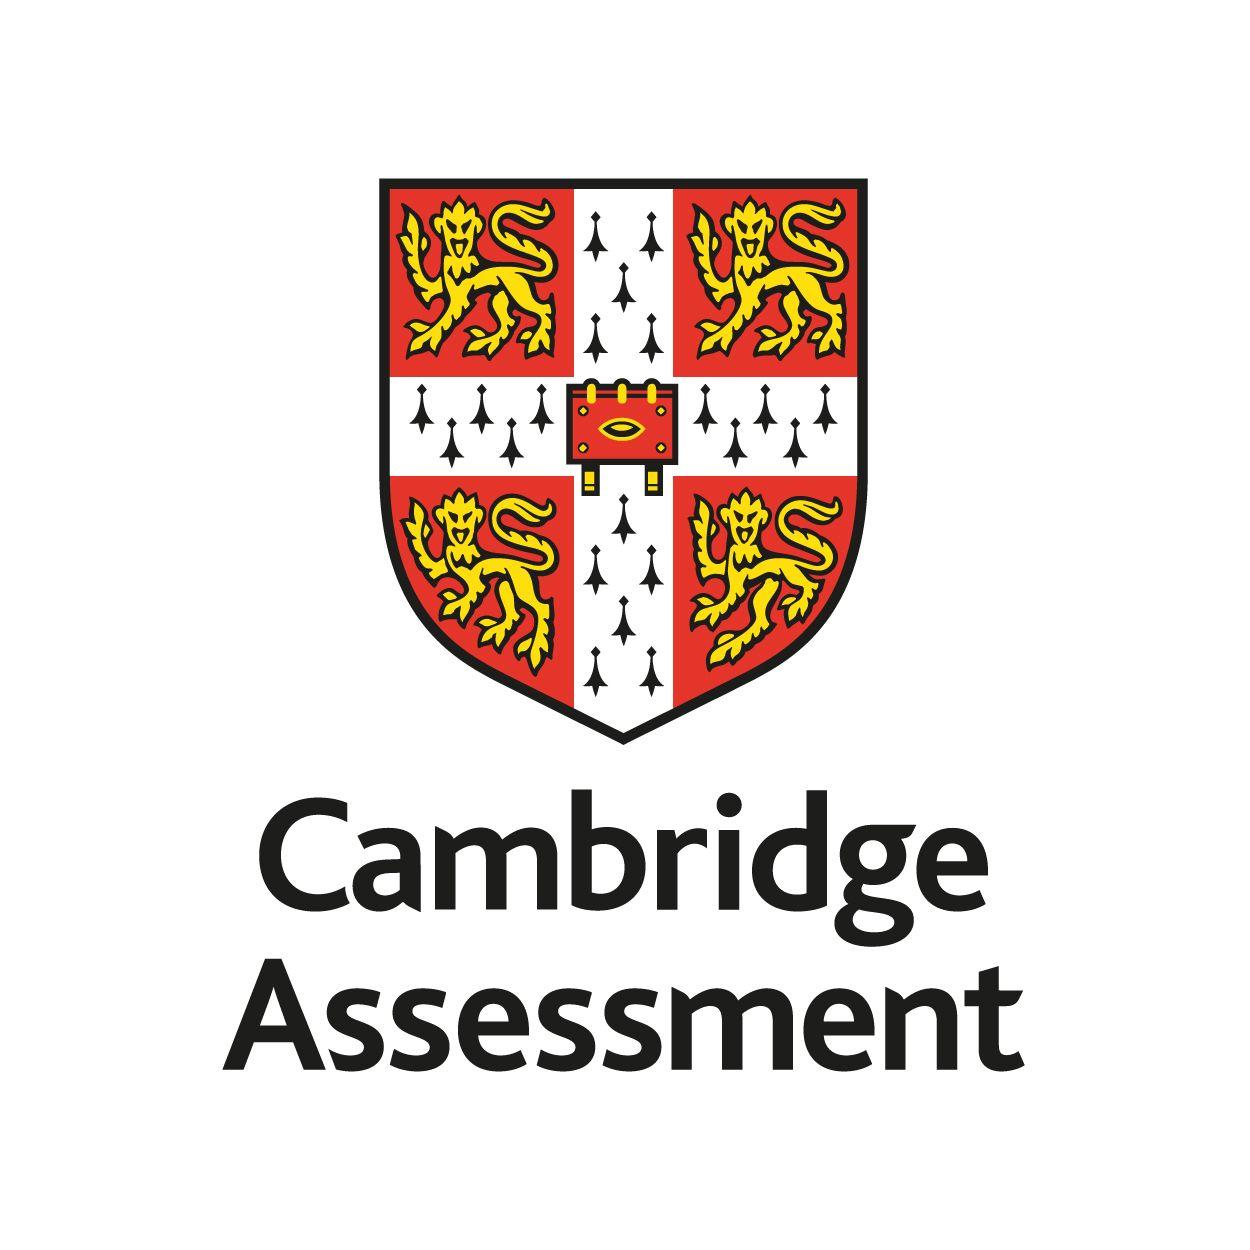 Cambridge Logo - File:Cambridge Assessment logo.jpg - Wikimedia Commons